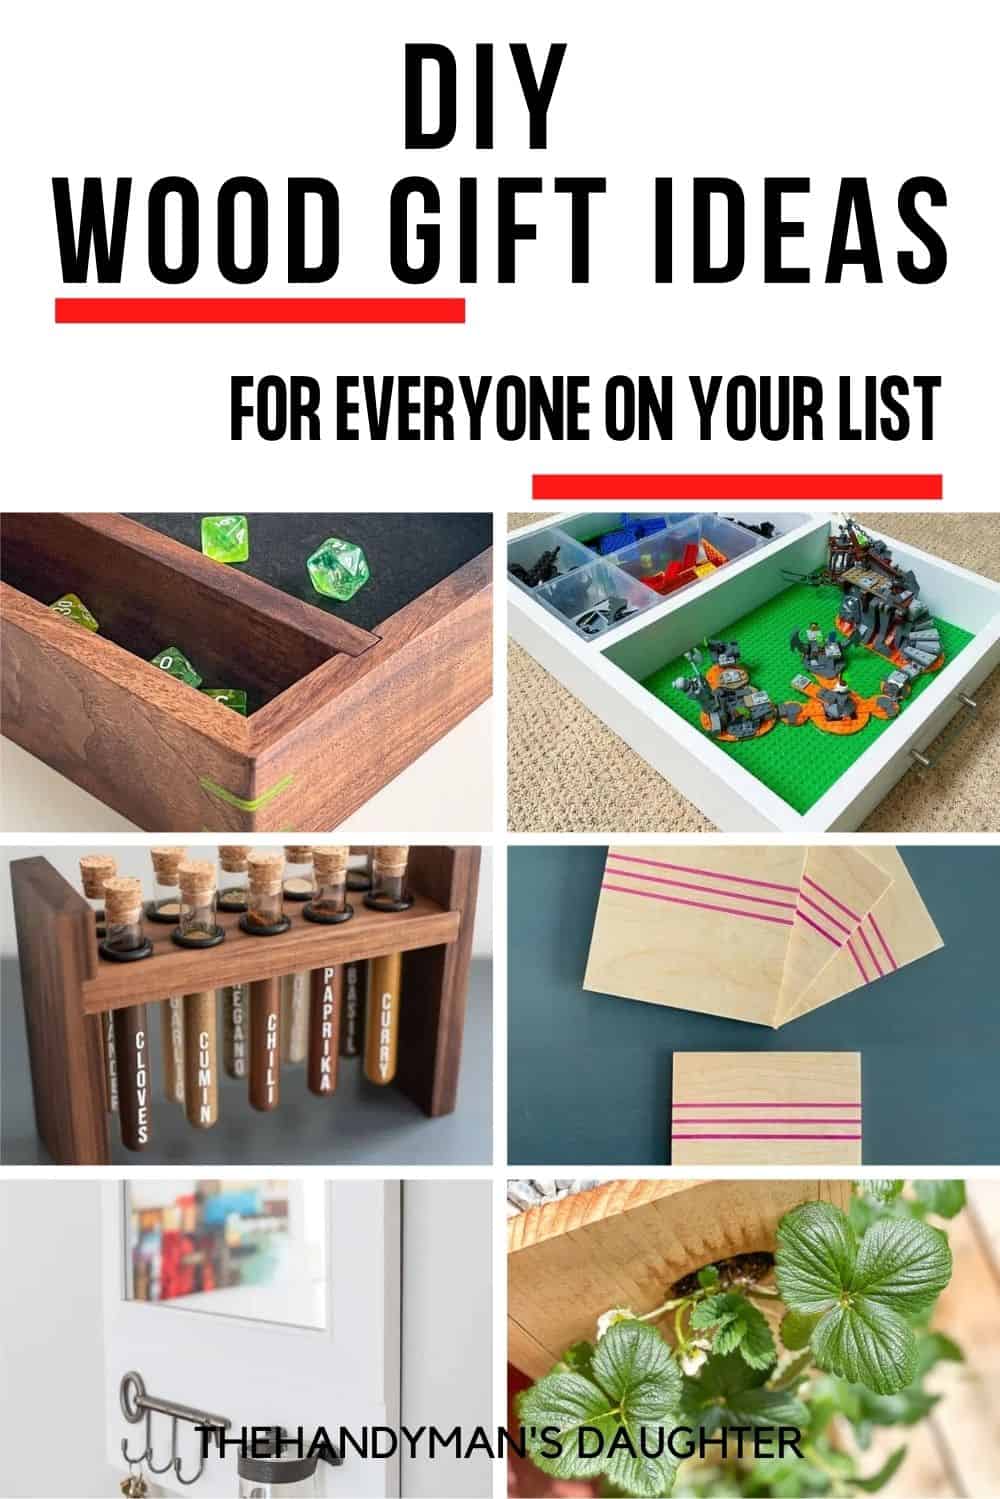 DIY wood gift ideas